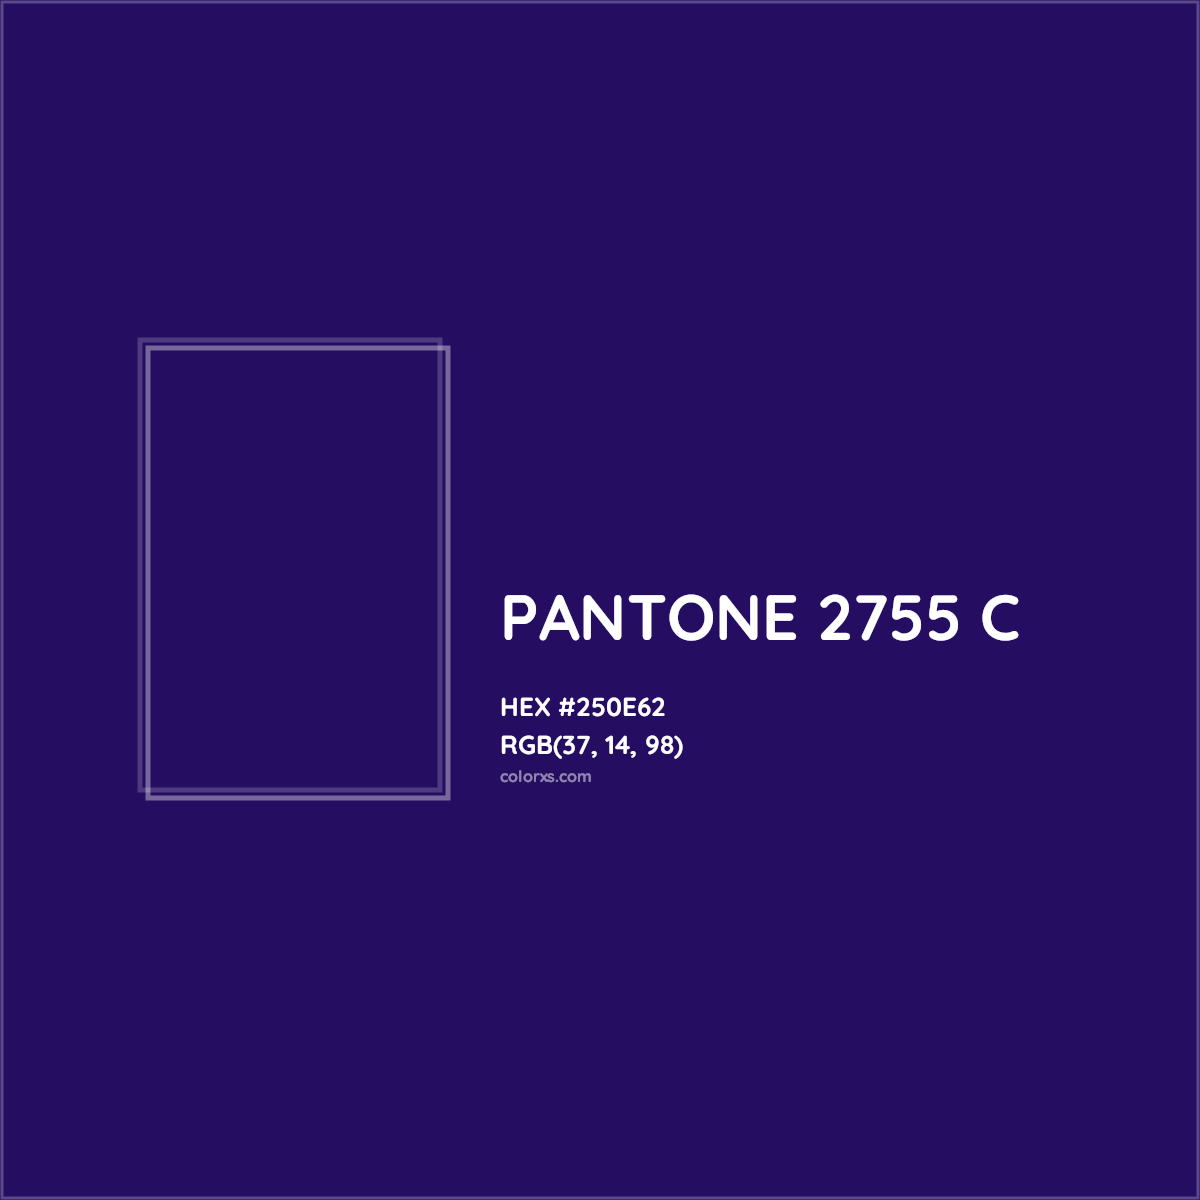 HEX #250E62 PANTONE 2755 C CMS Pantone PMS - Color Code